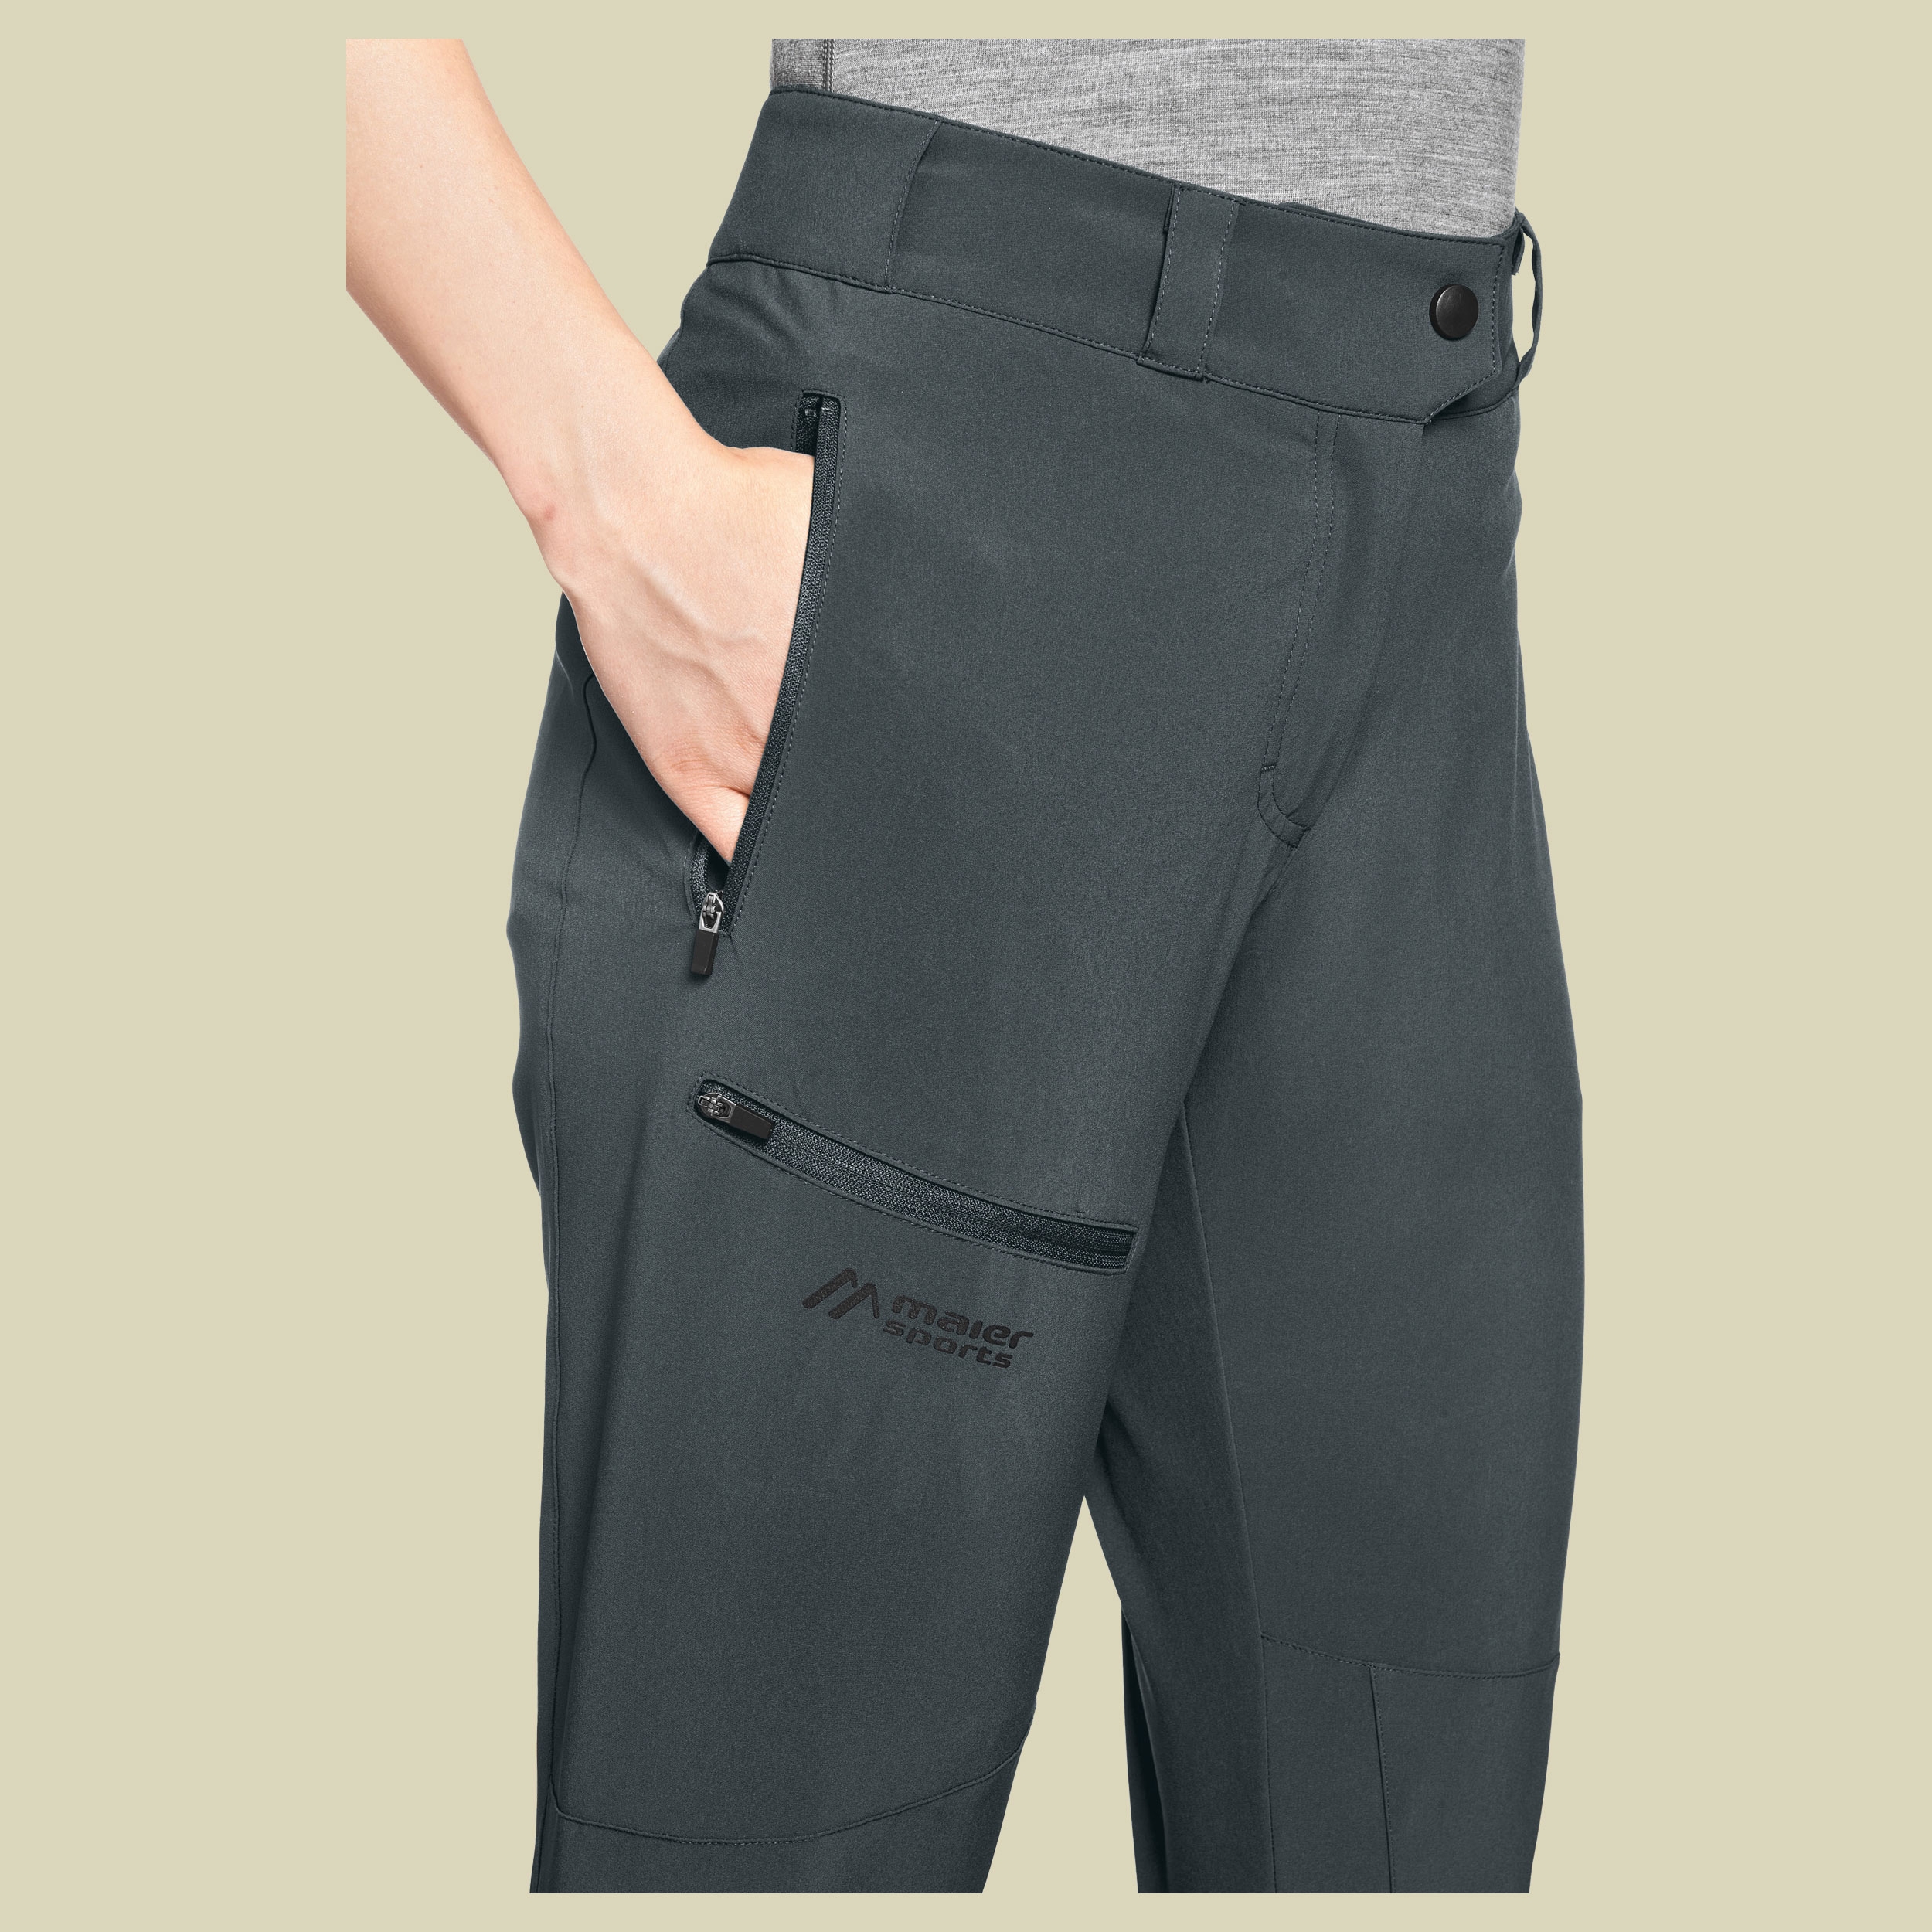 Activate Winter Pants Women Größe 36 Farbe black